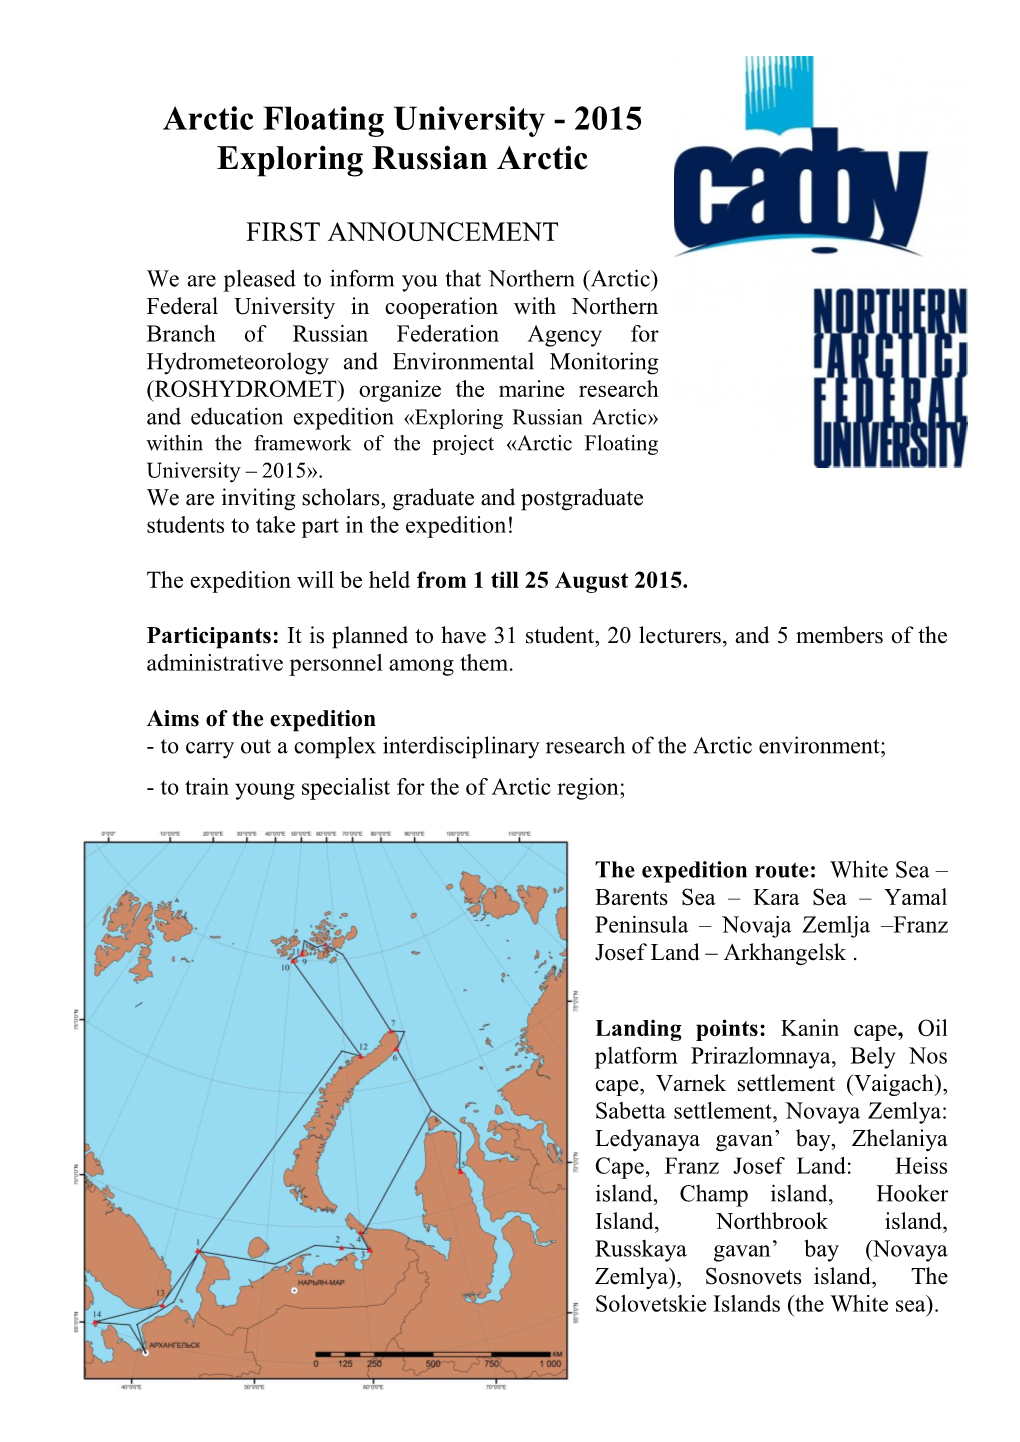 Arctic Floating University - 2015 Exploring Russian Arctic